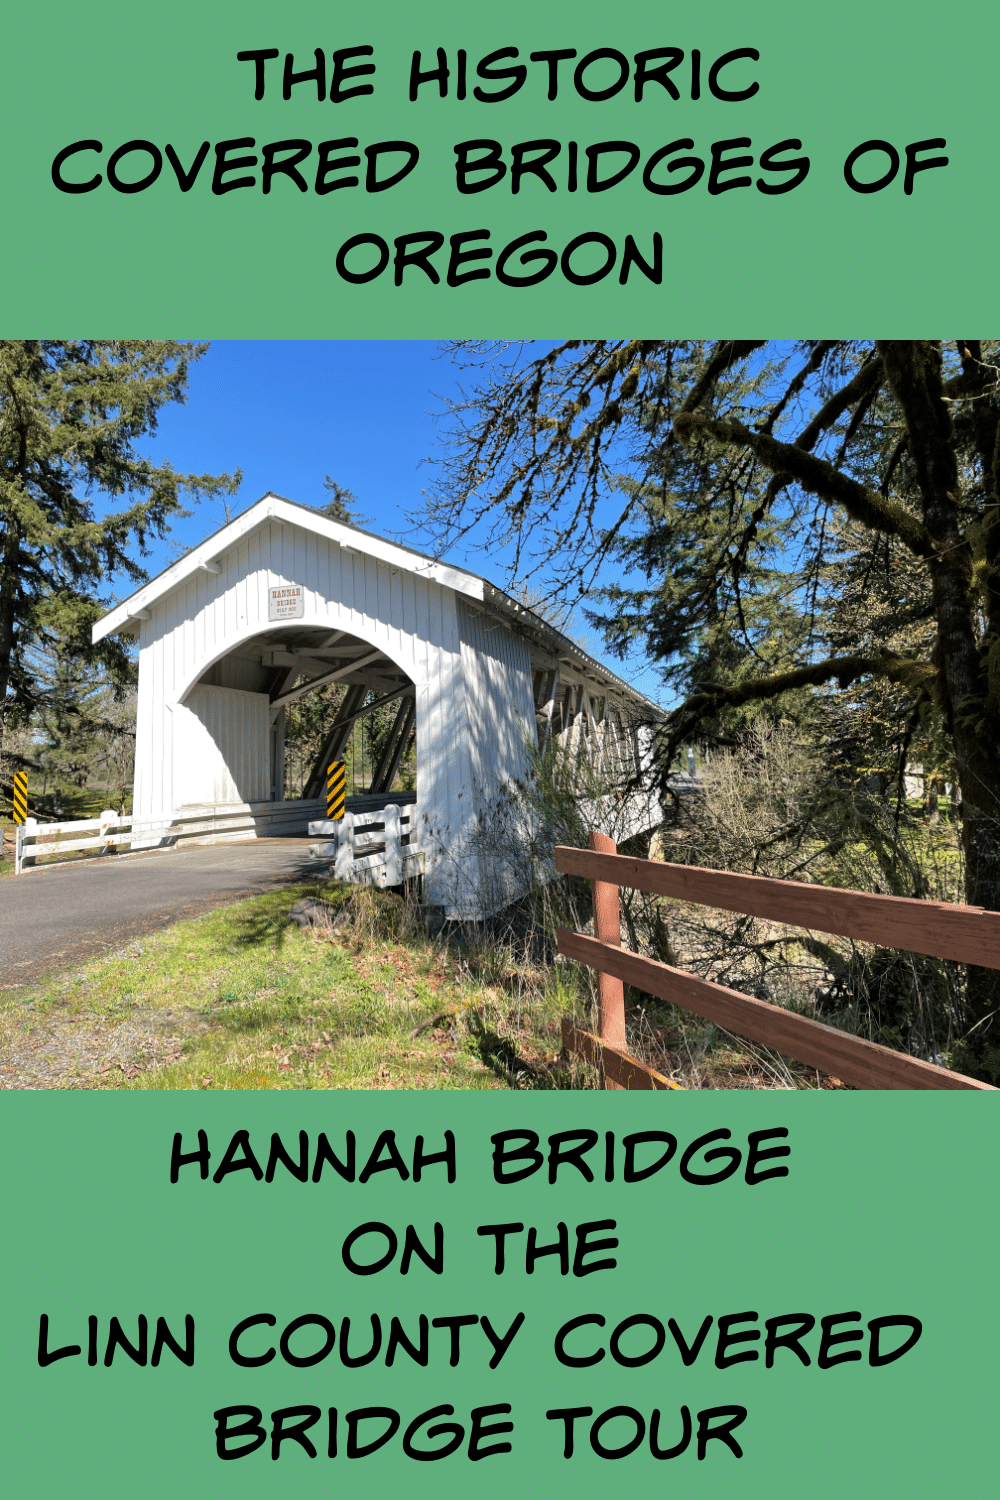 Pinterest pin of the Hannah Historic Covered Bridge